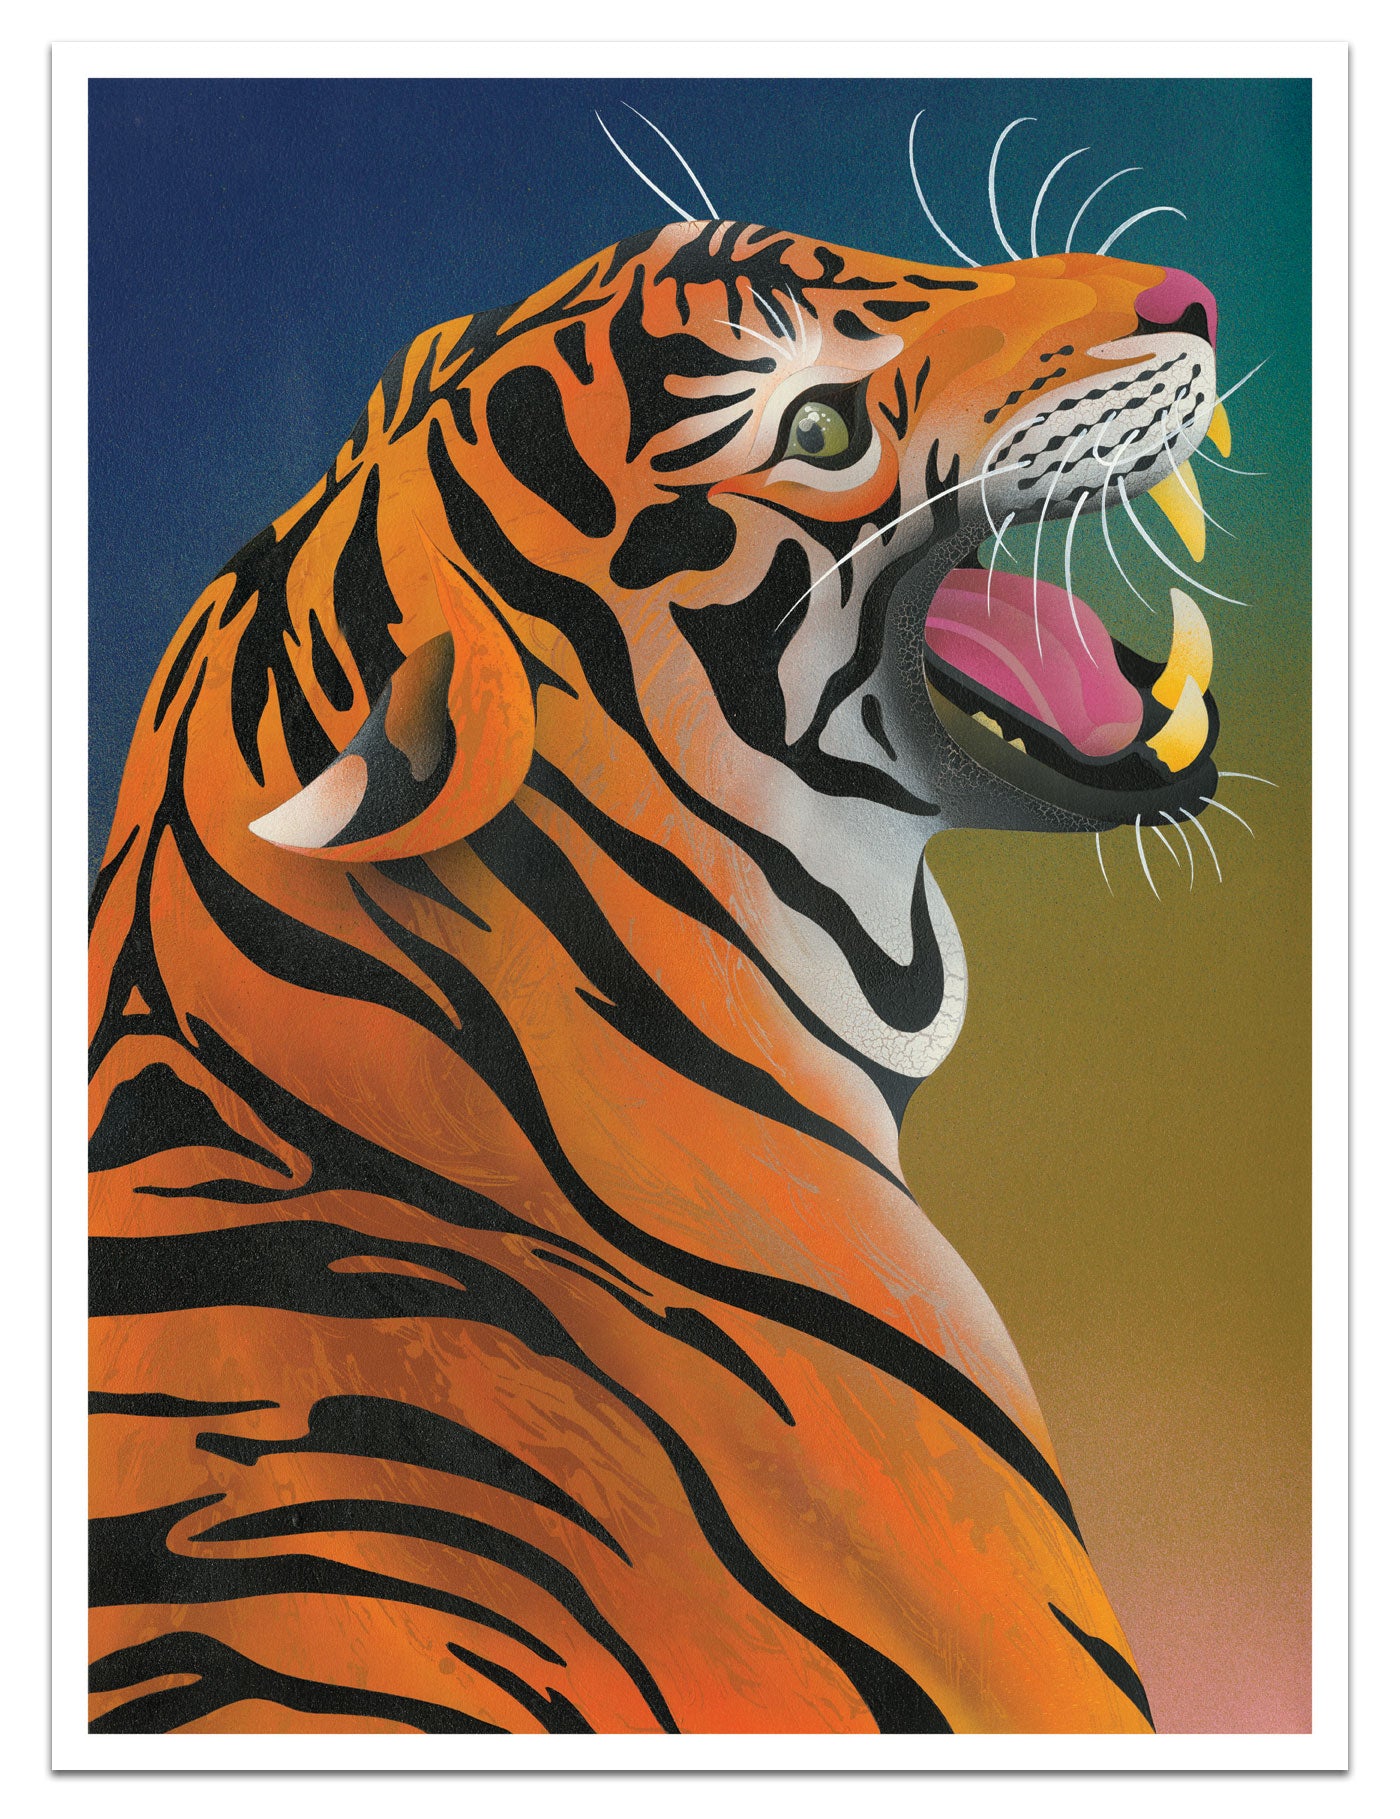 Casey Gray - "Tiger" print